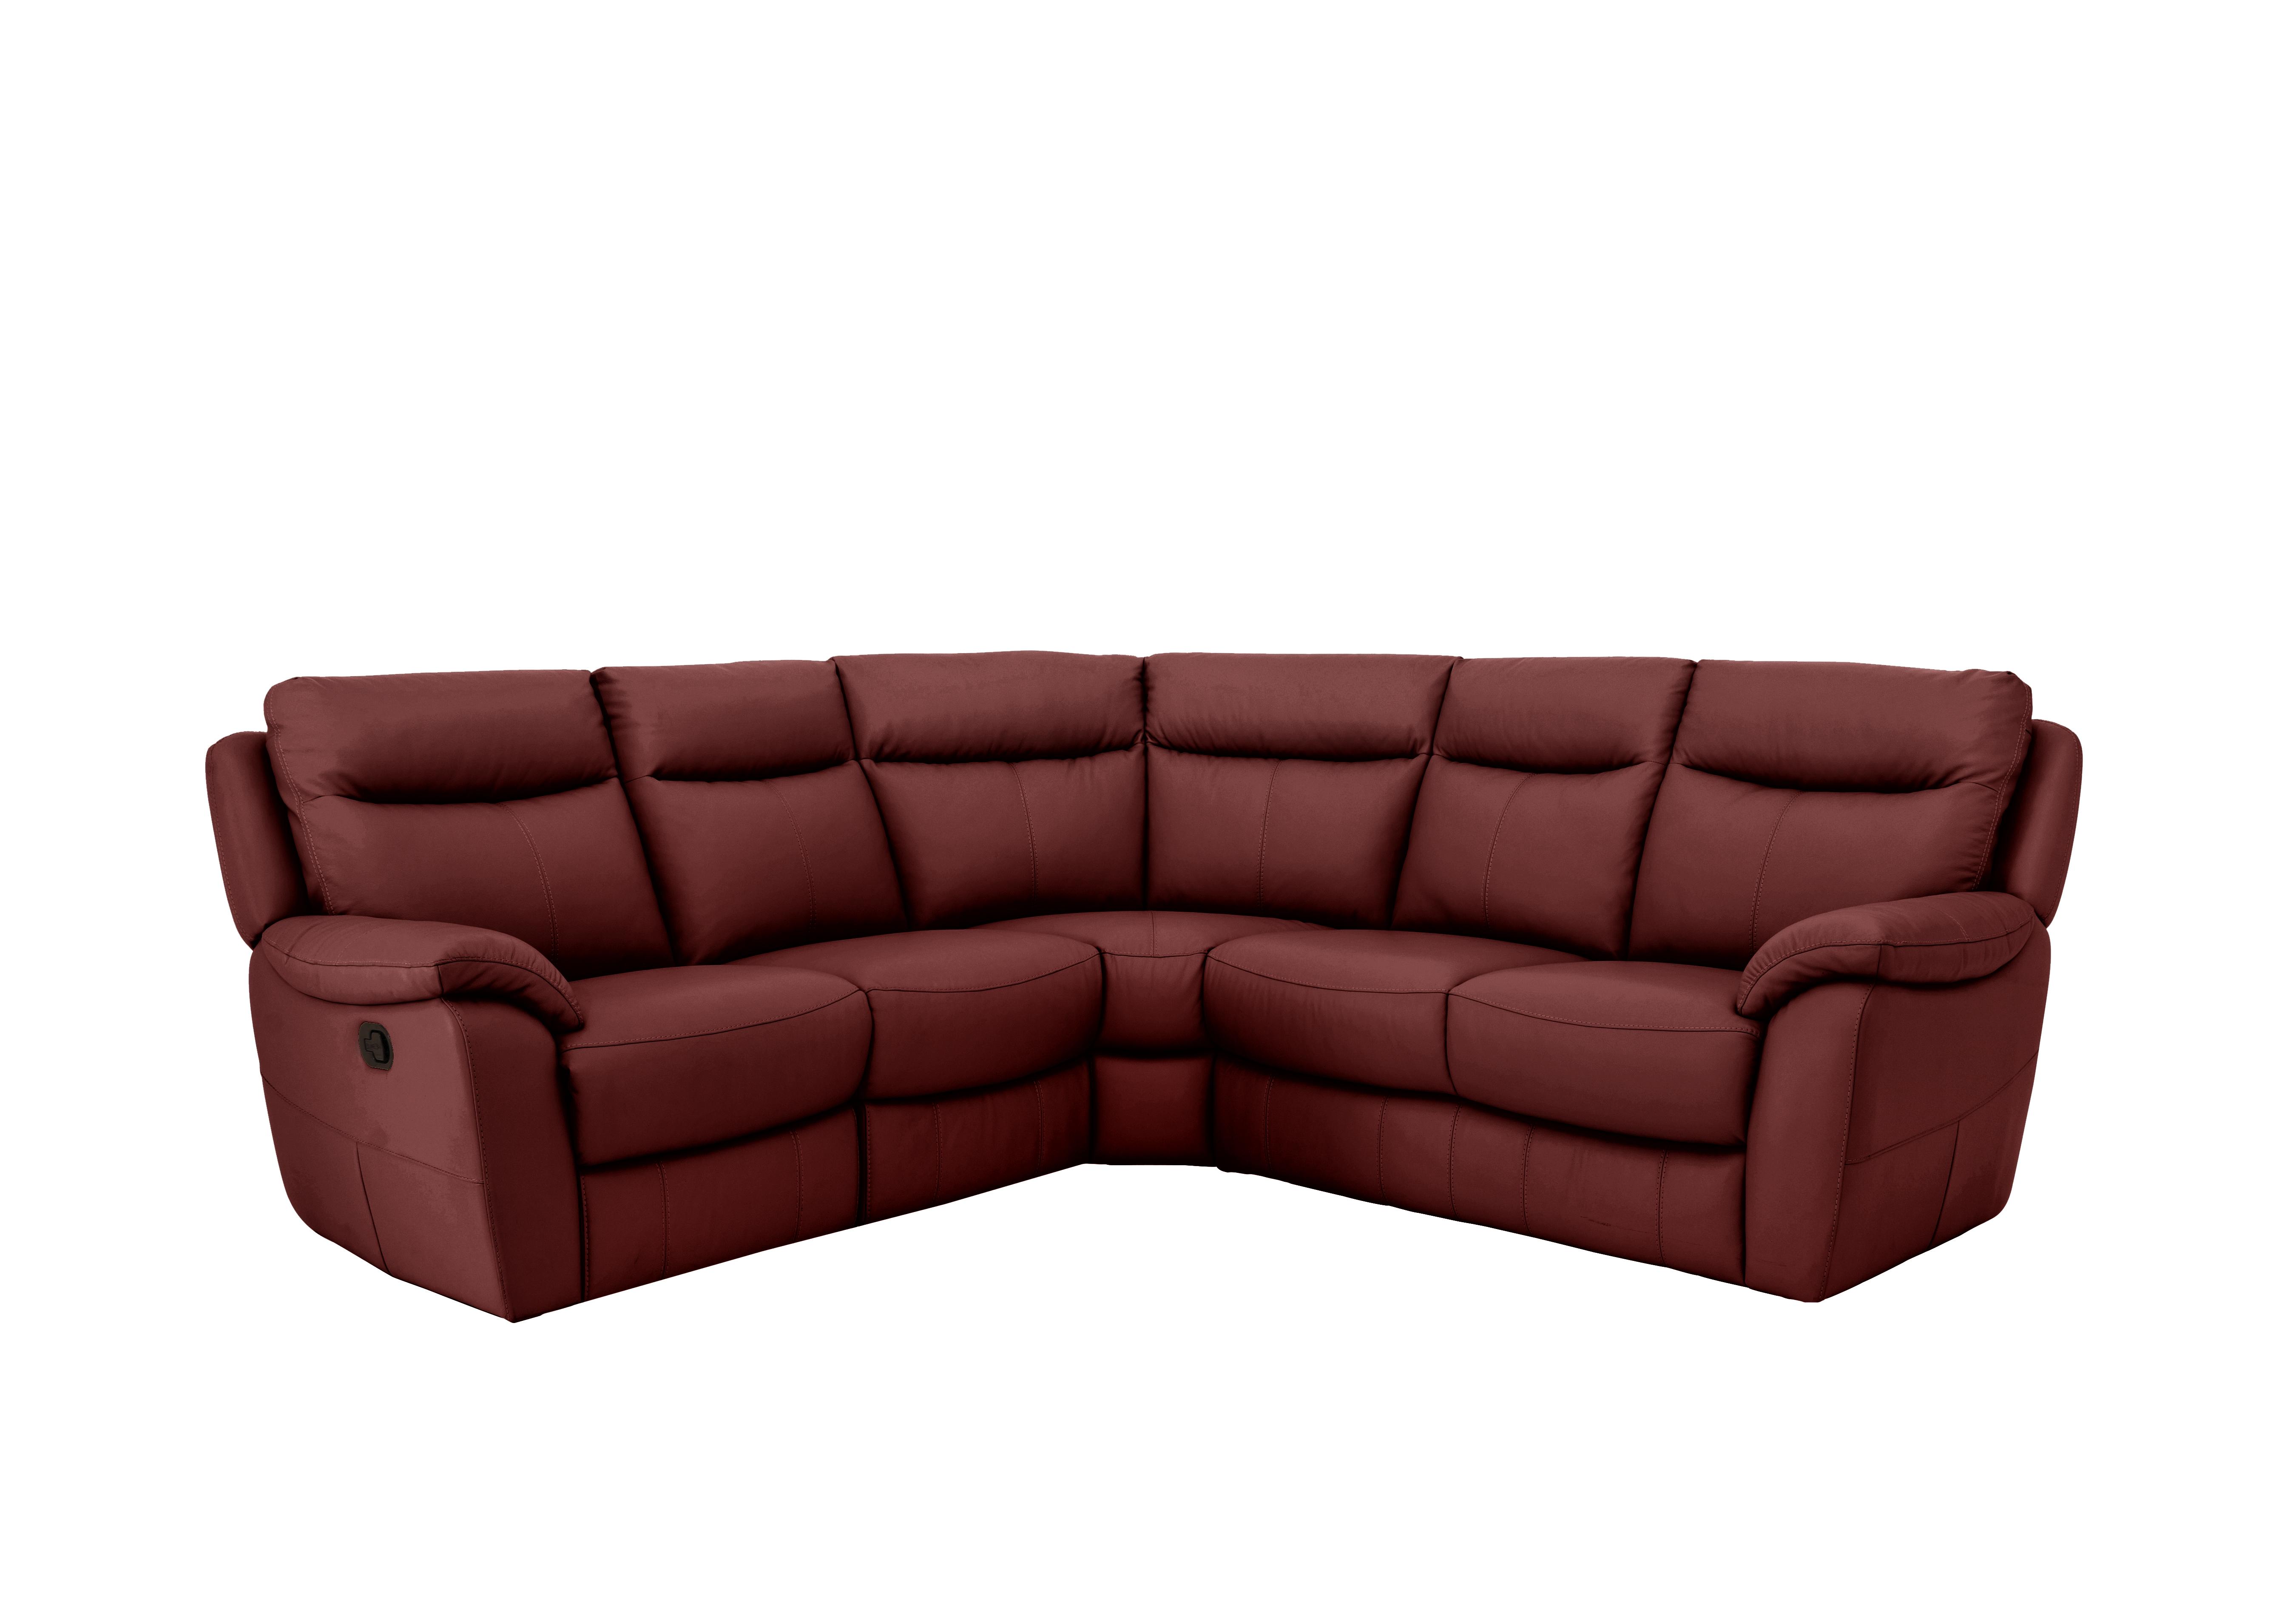 Snug Leather Corner Sofa in Bv-035c Deep Red on Furniture Village